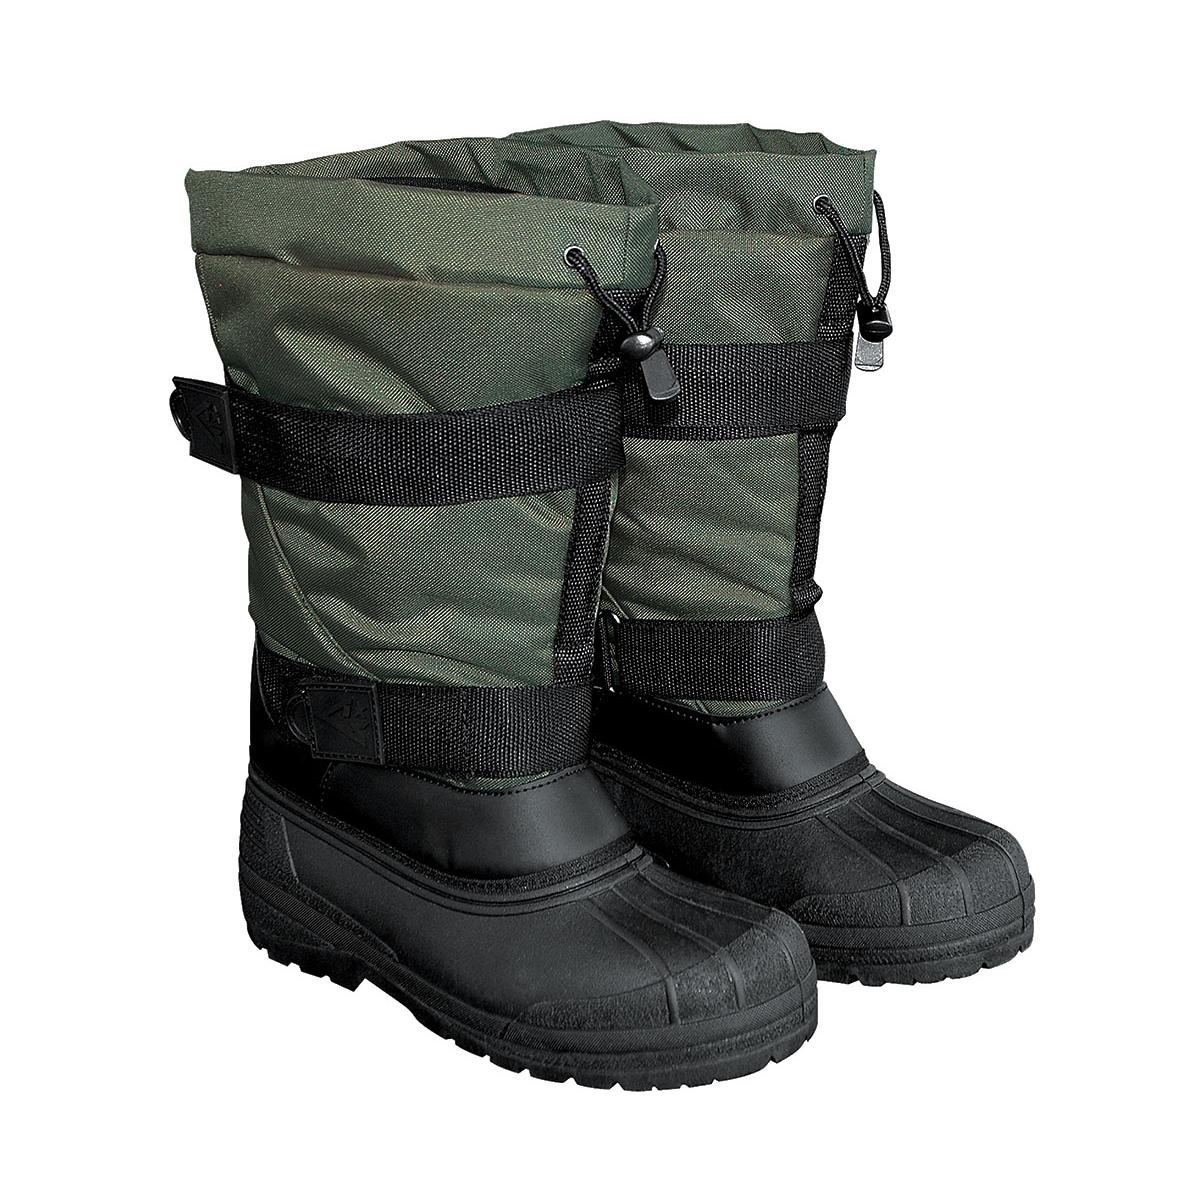 Winterstiefel Arctic Boots oliv